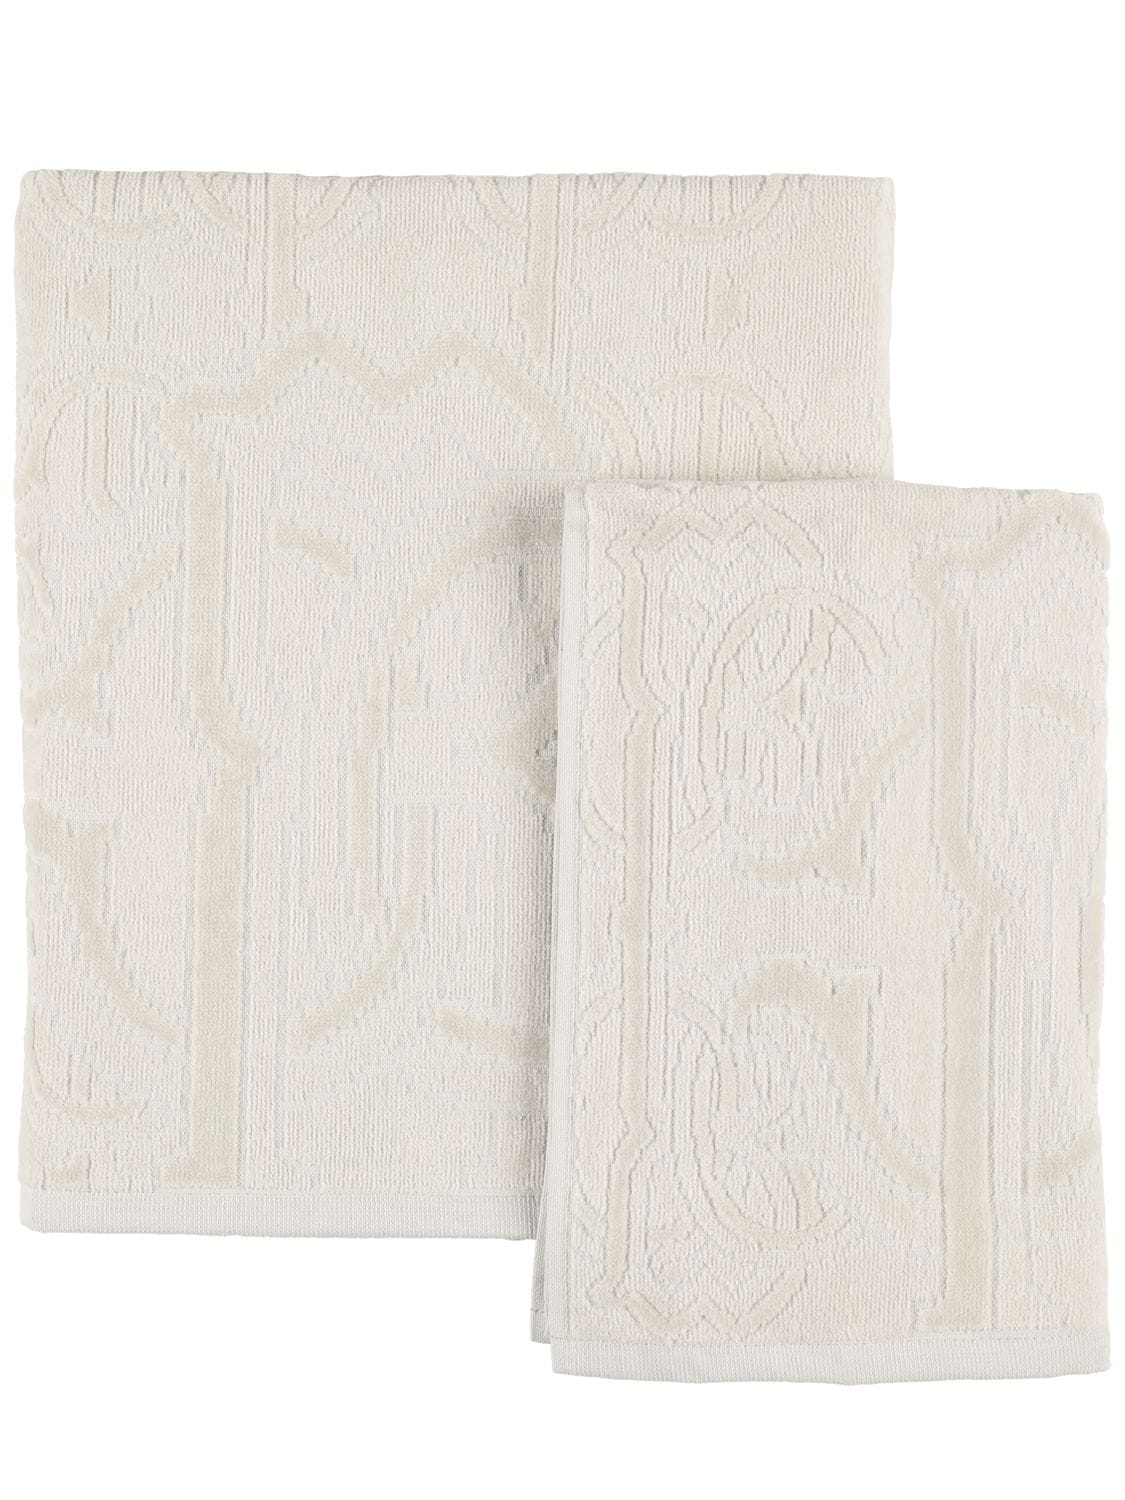 2 Roberto Cavalli Bath Sheet Towels Pitone Python Set of TWO 39x60 NWT